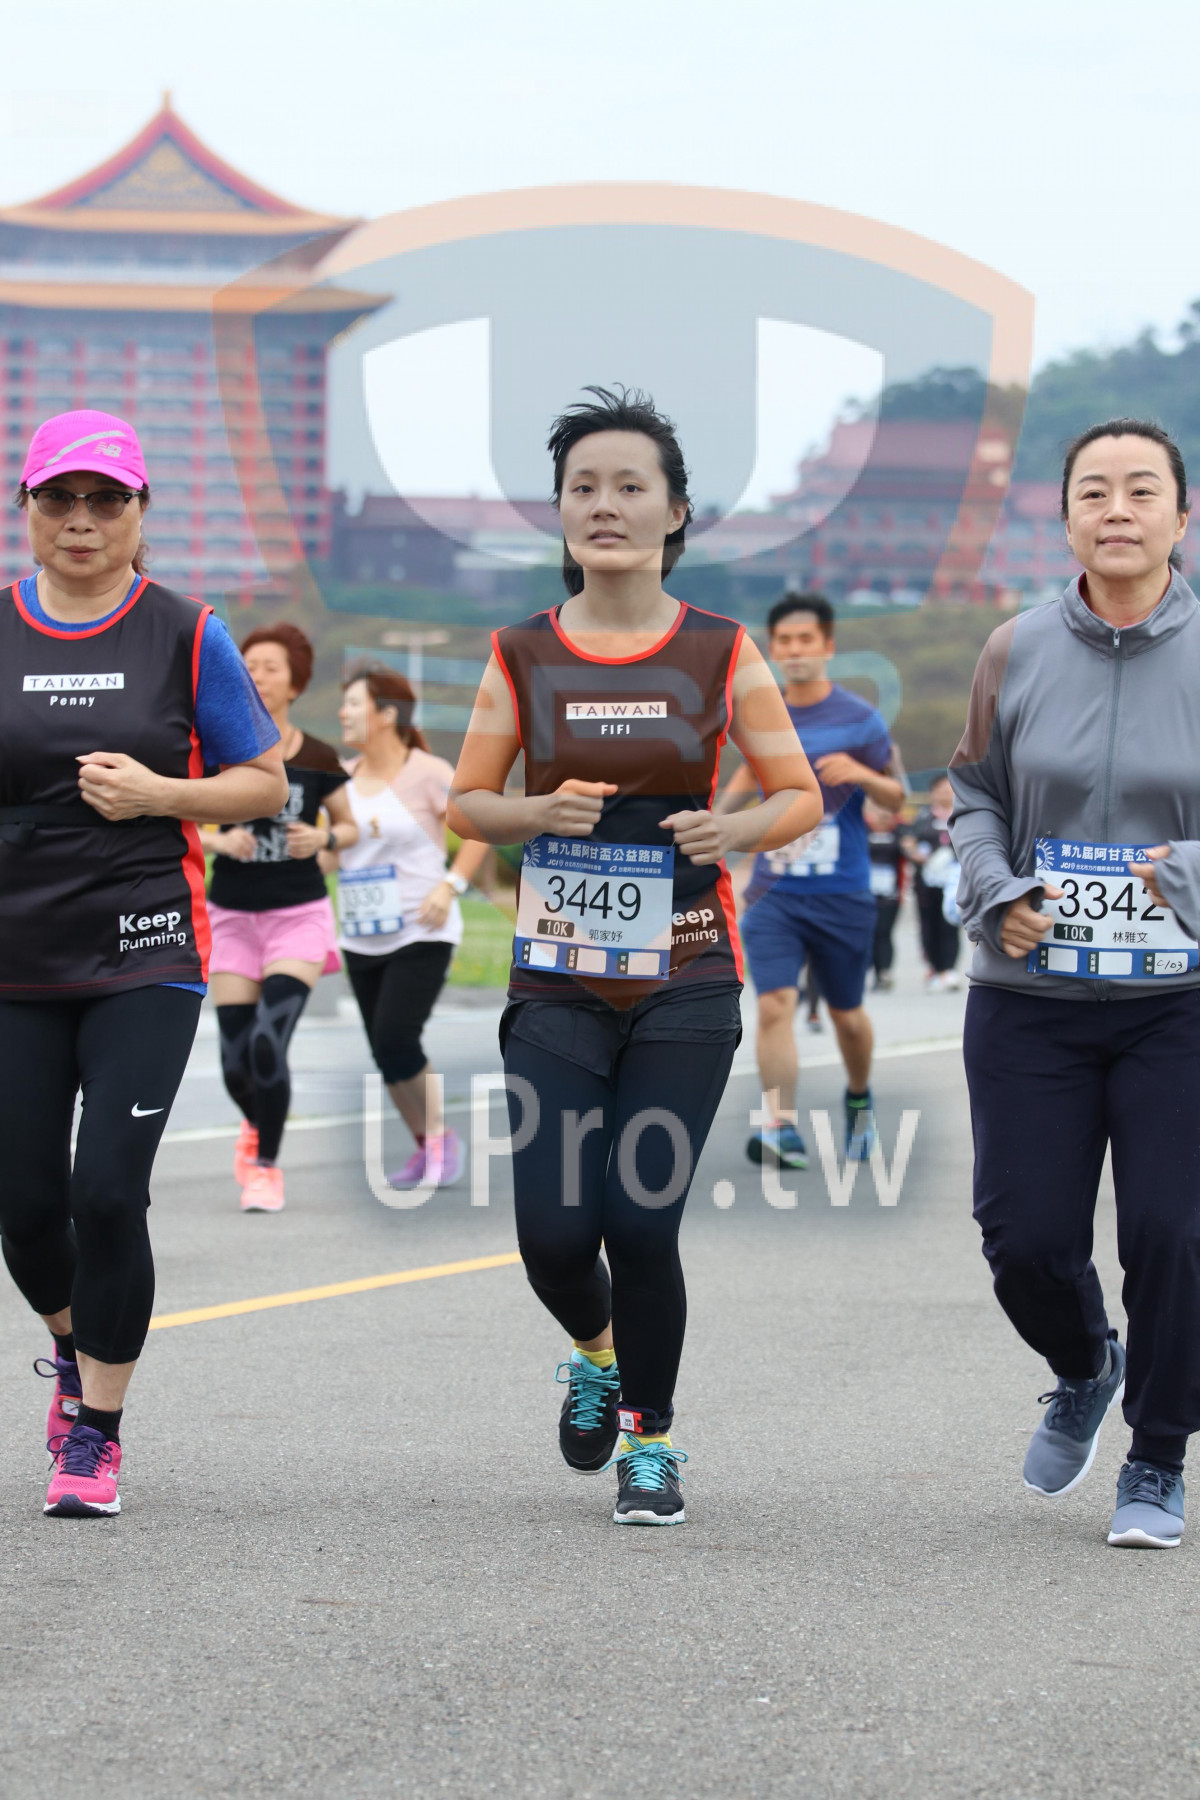 Penny,TAIWAN,FIFI,RE,,3449,#334,Keep,Running,EL13,,TE ,10K,nning|2018 第九屆阿甘盃公益路跑|Soryu Asuka Langley